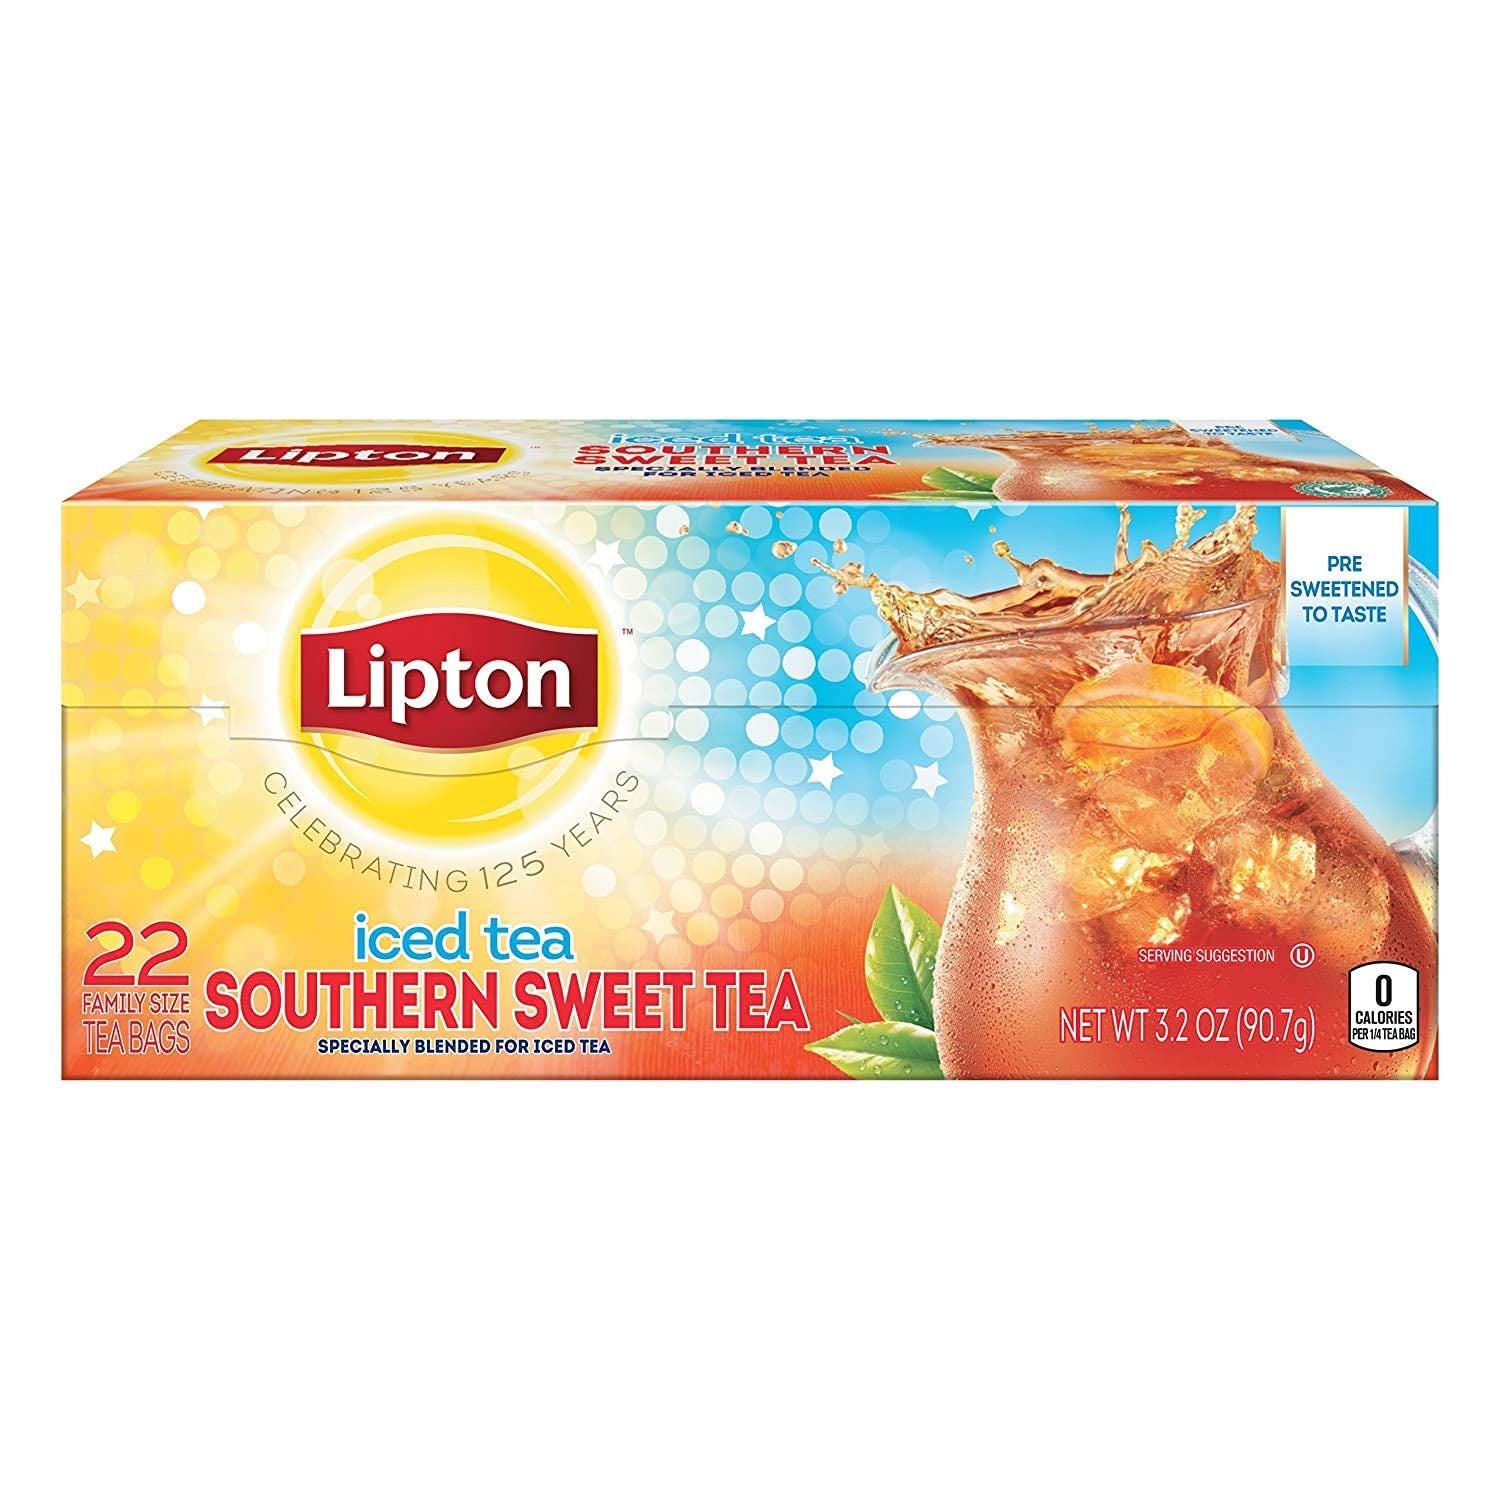 Lipton Iced Tea Southern Sweet Tea 22ct